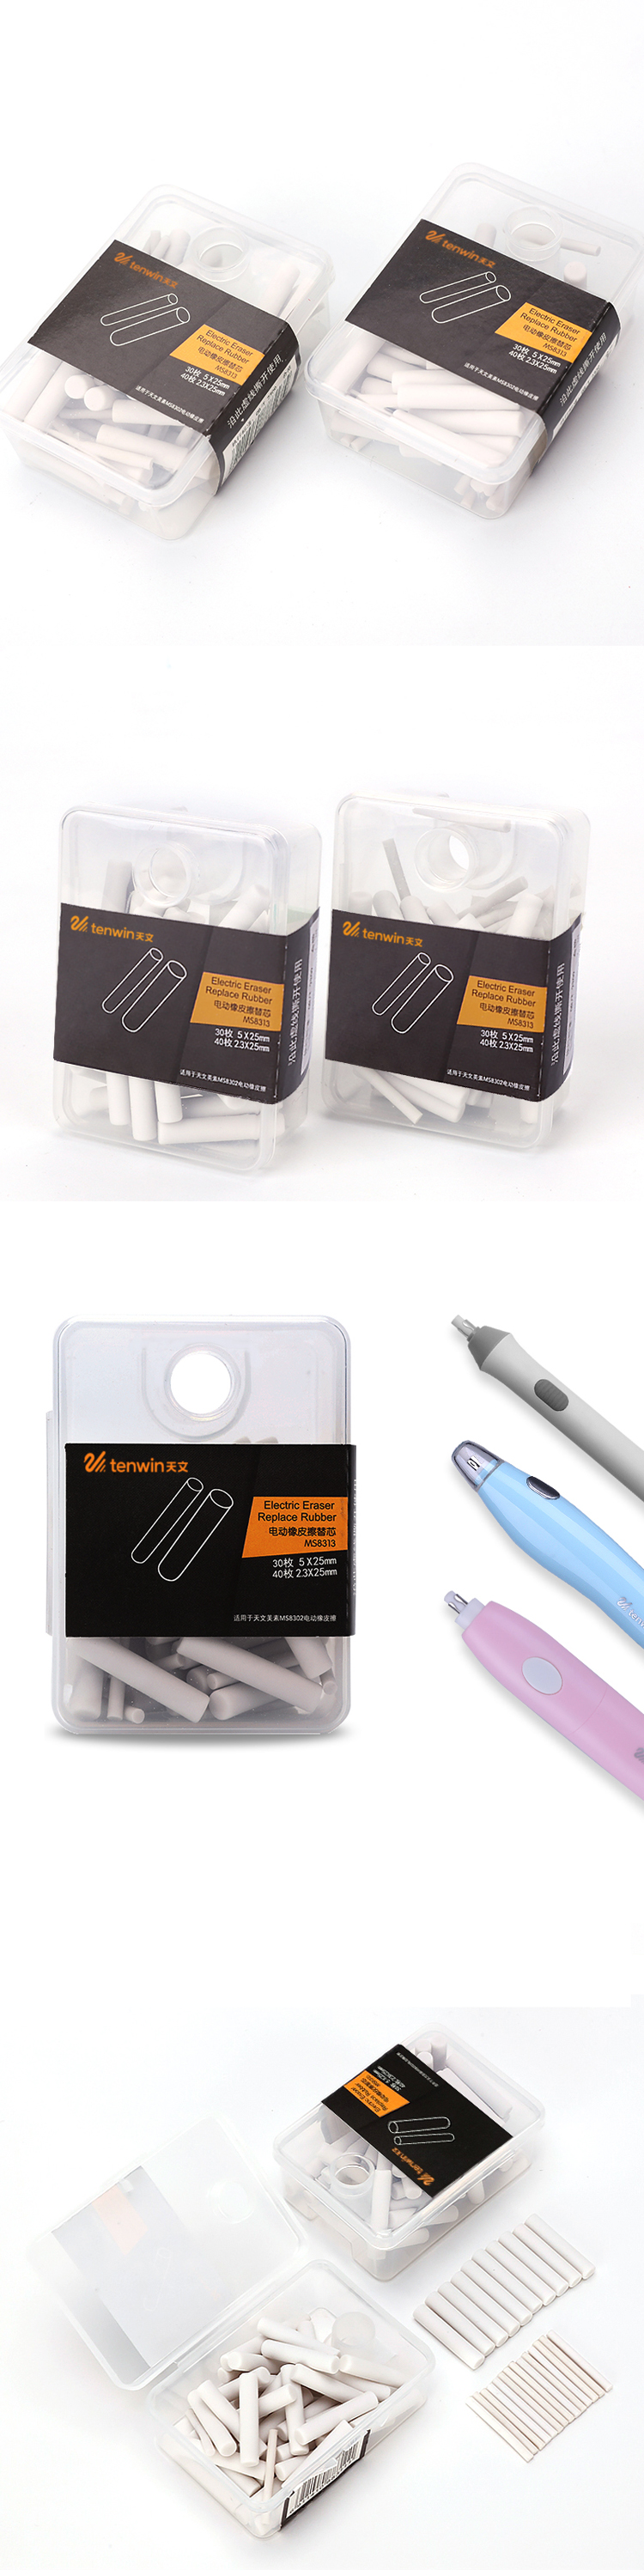 Tenwin Rubber Eraser Refills For Electric Battery Eraser Model In Artist School